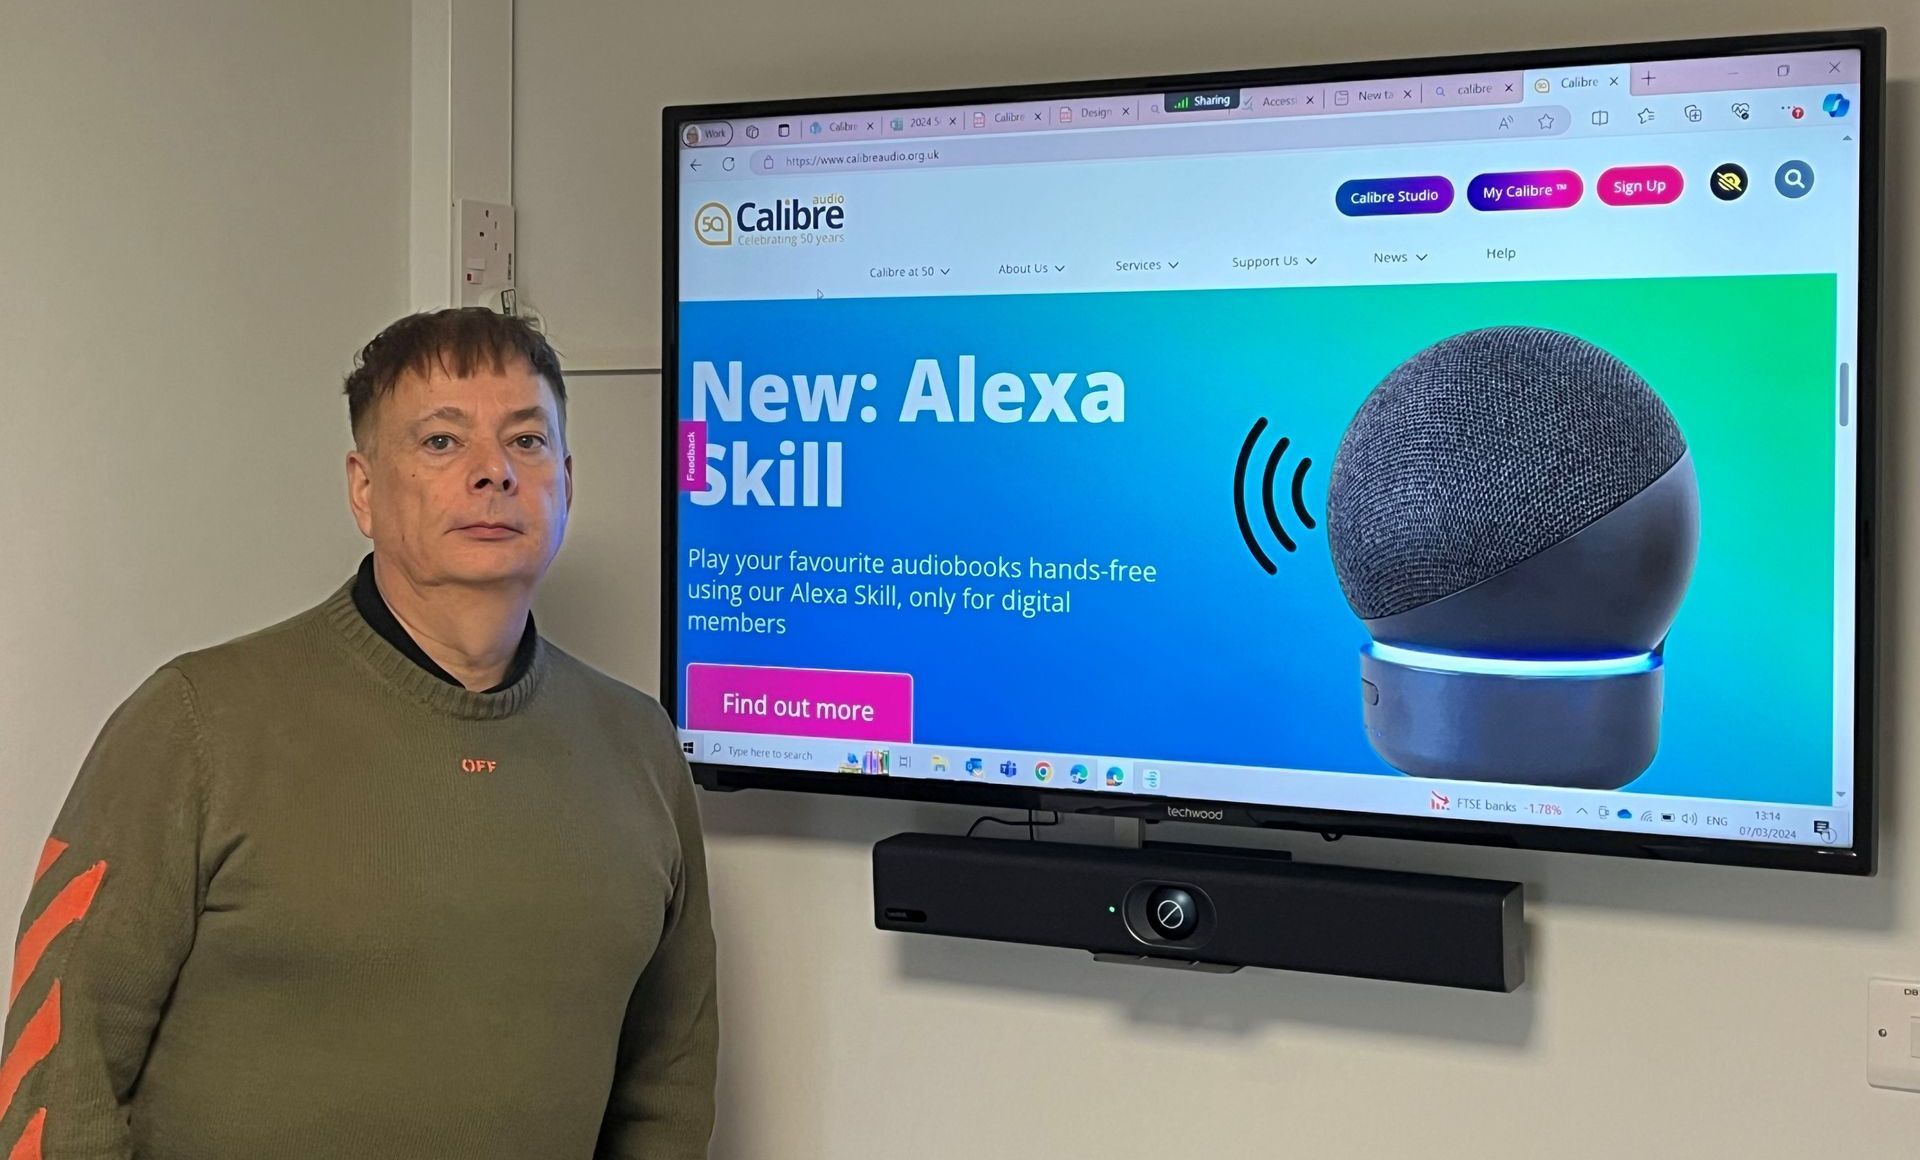 A photo of Calibre's Anthony Kemp stood by a display highlighting Calibre's New Alexa skill.